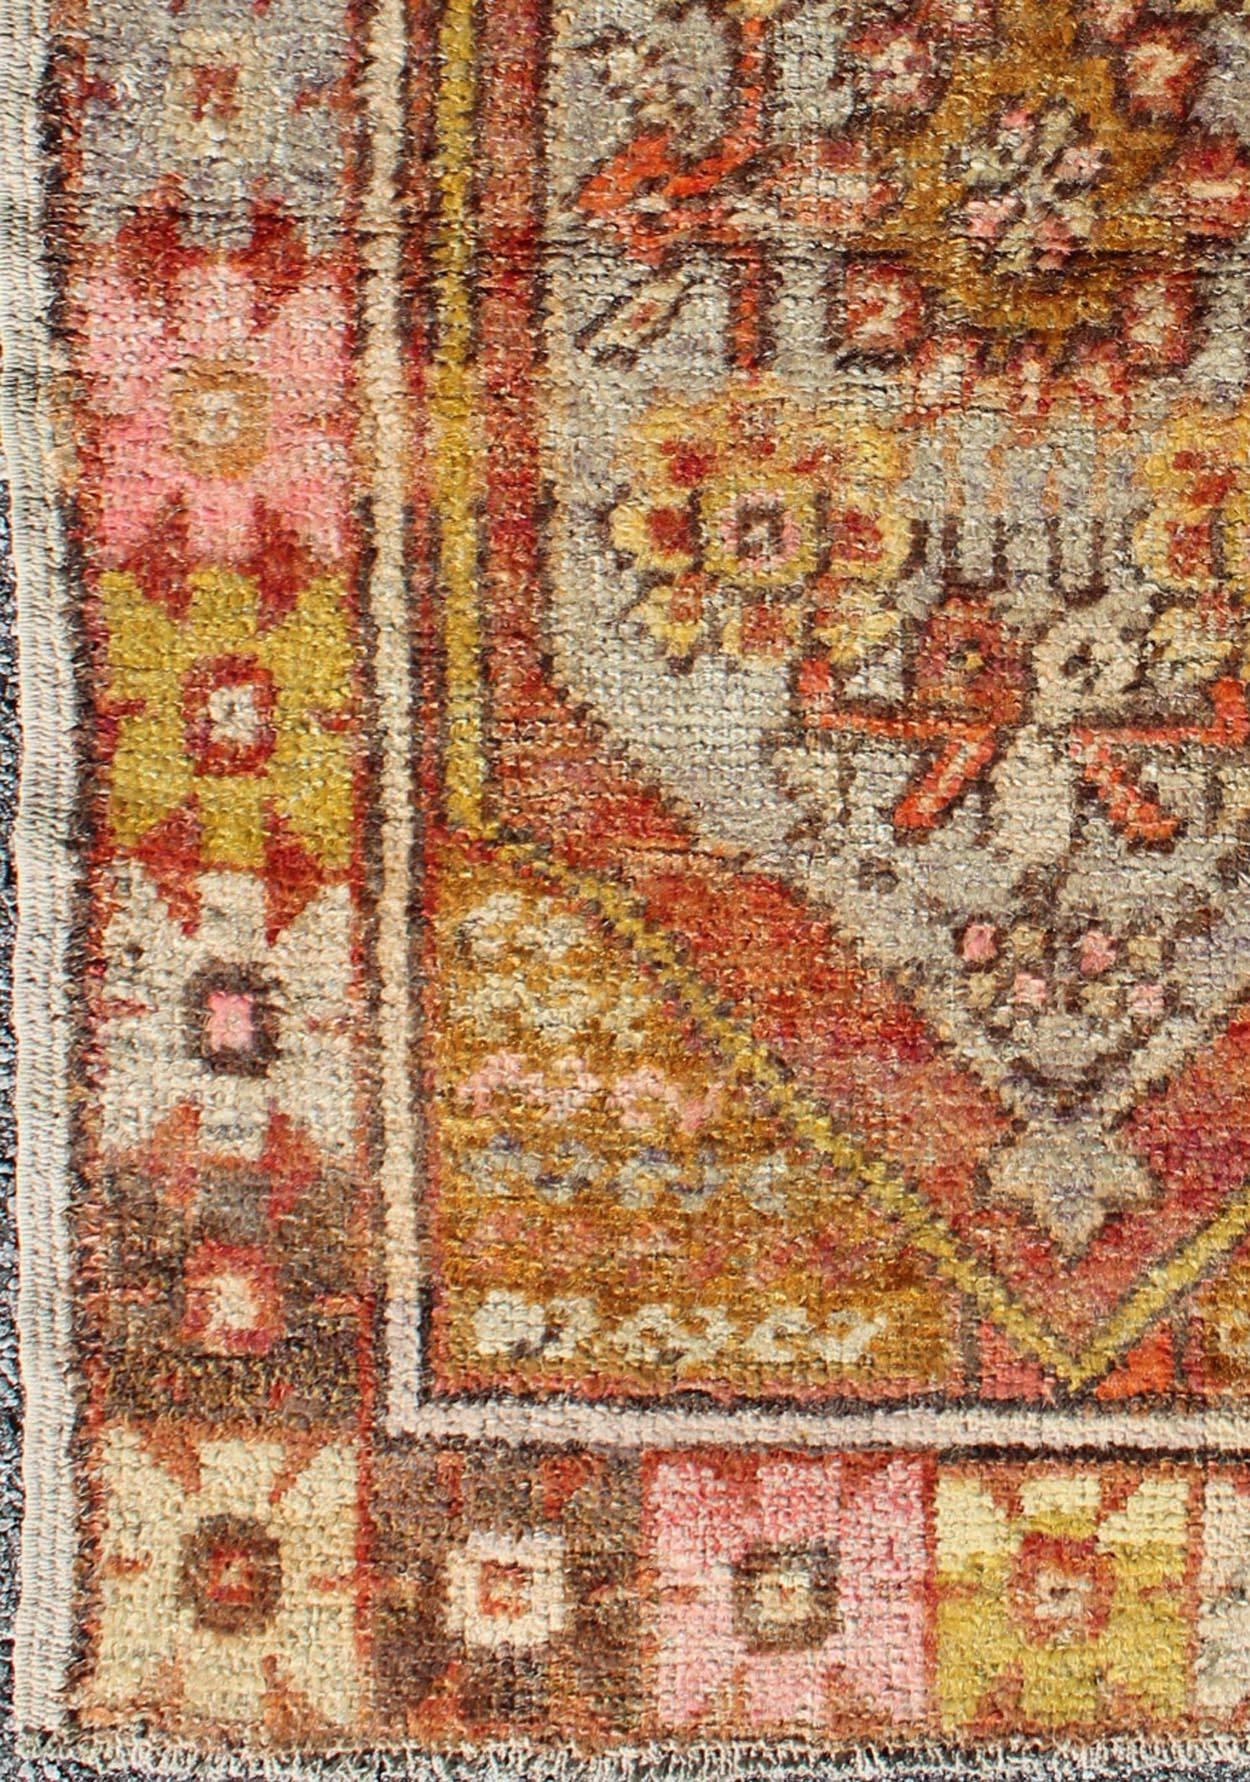 Colorful vintage Turkish Small Oushak with floral medallion and border, Keivan Woven Arts, rug #DUR-3457, country of origin / type: Turkey / Oushak, circa mid-20th century

Measures: 2.8 x 4.1

This small vintage Turkish Oushak carpet (circa